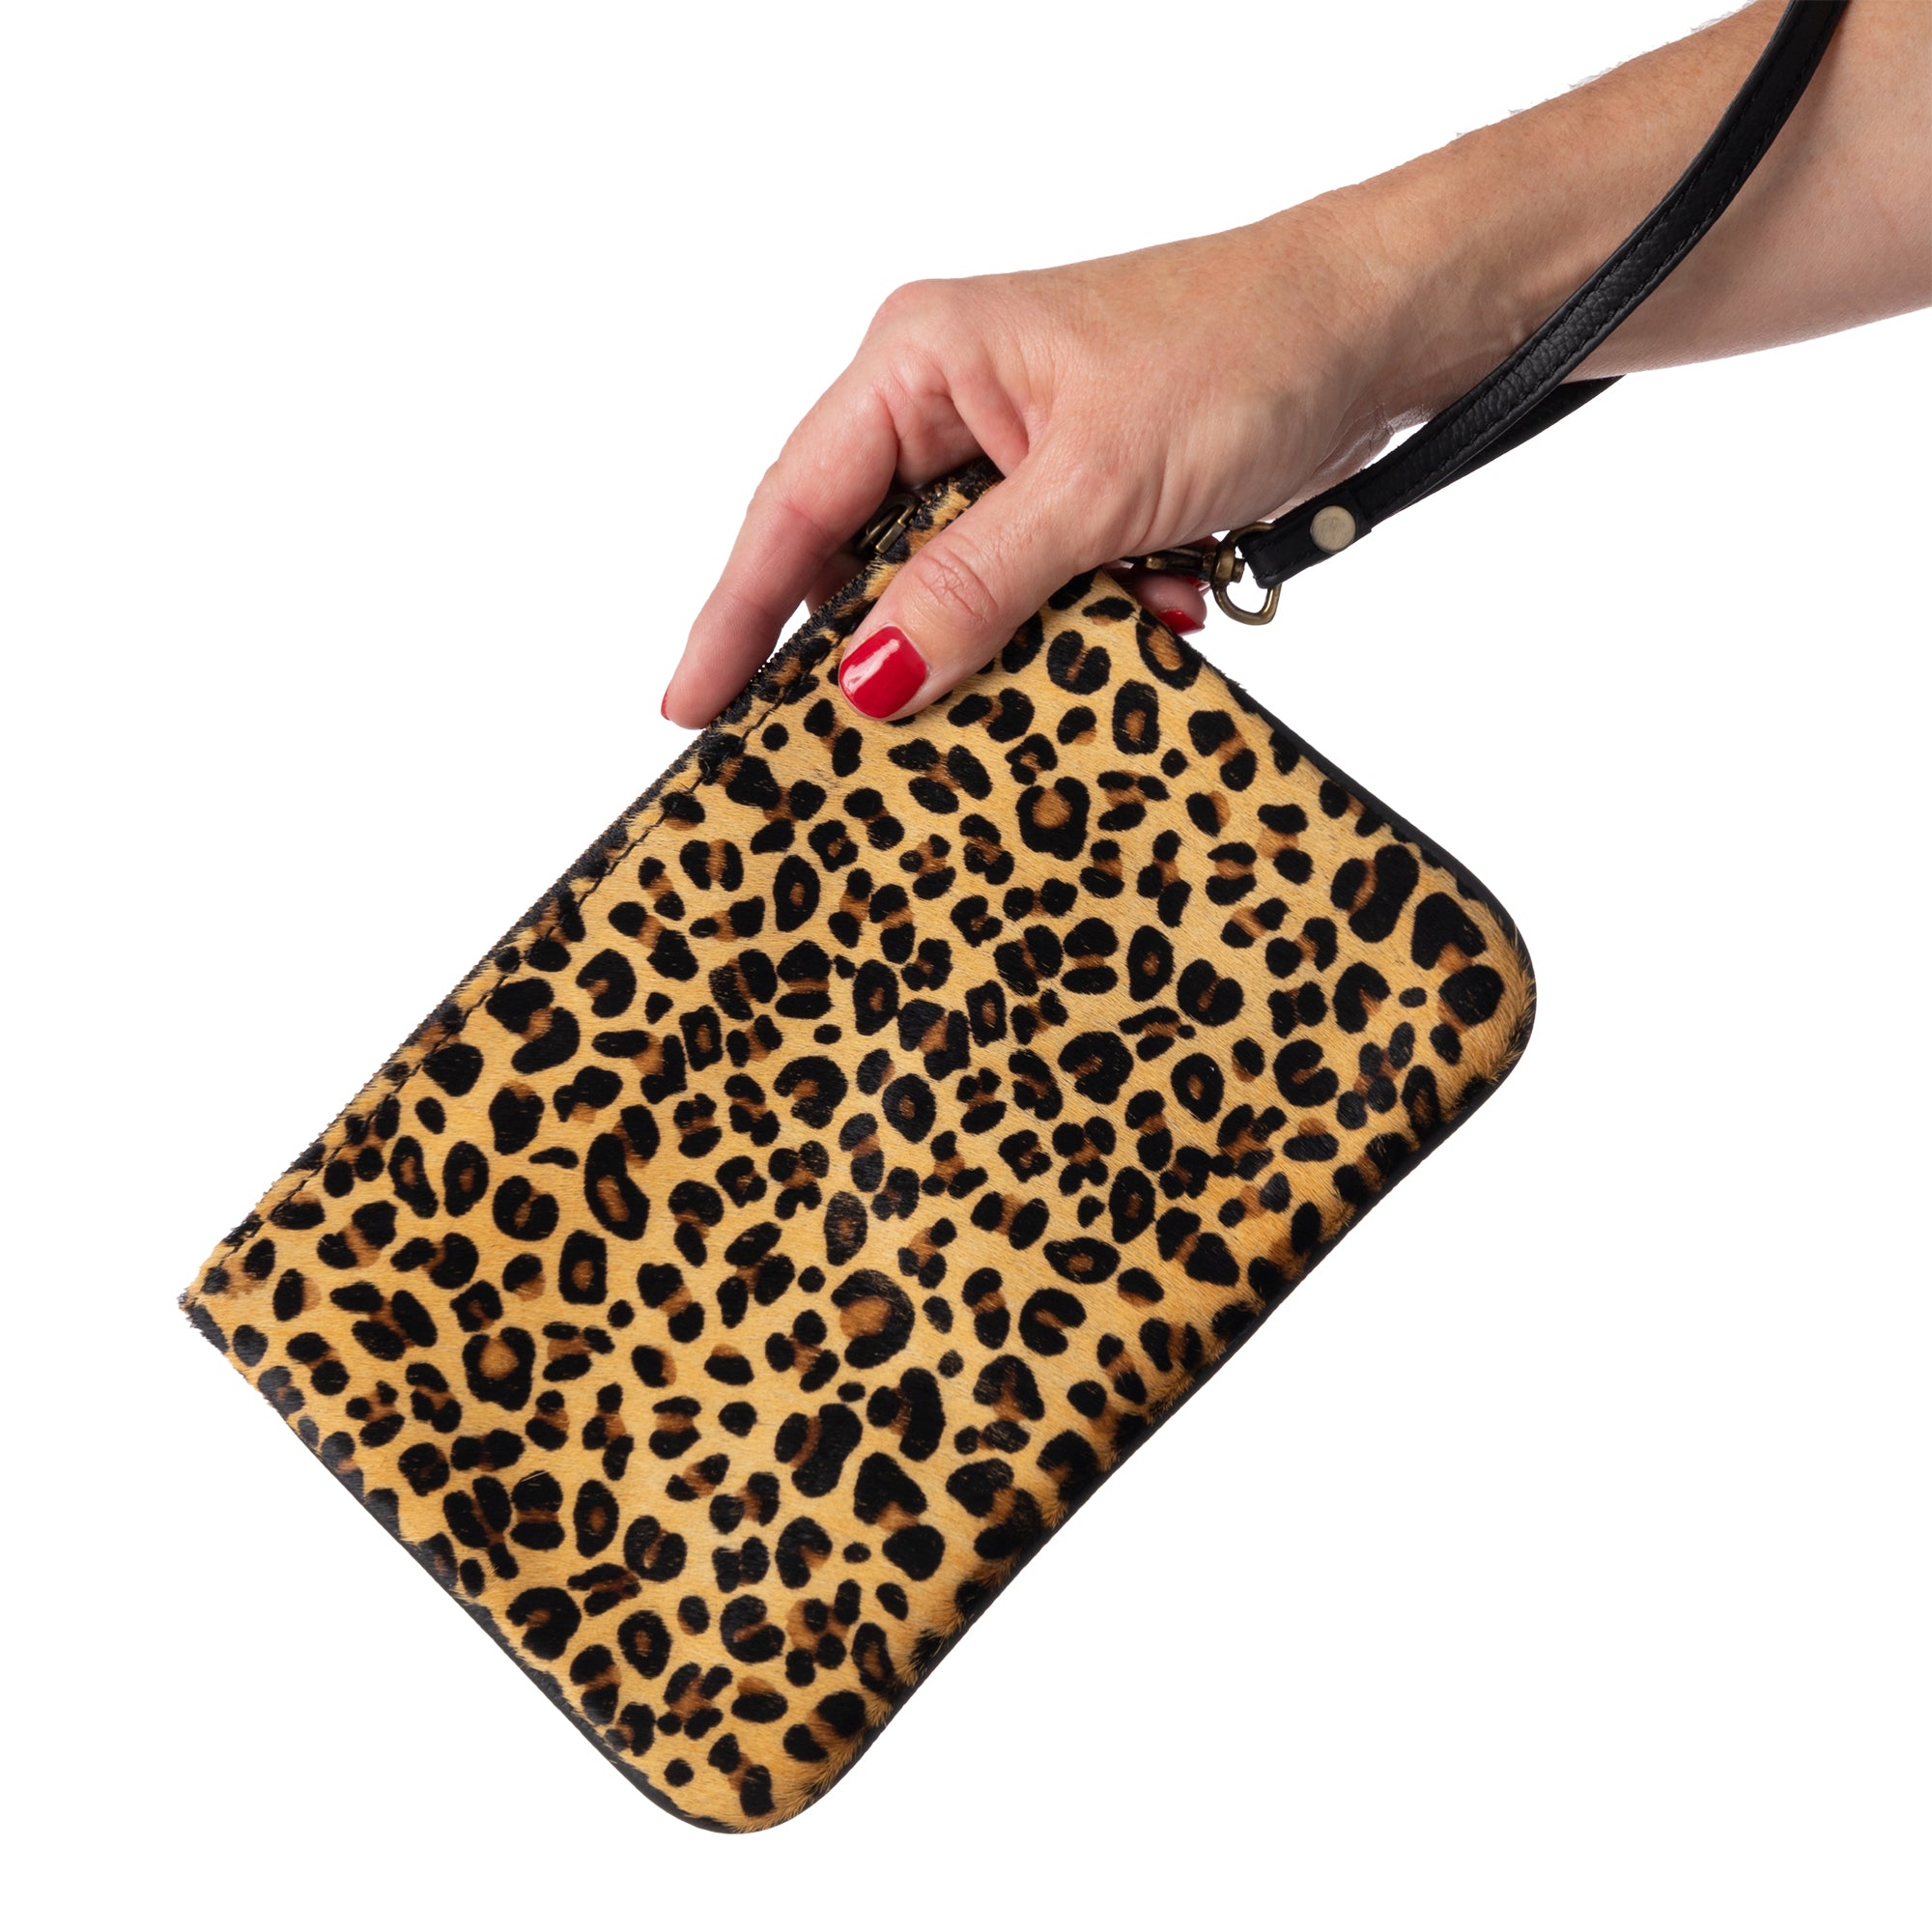 Jimmy Choo for H&M leopard print clutch purse | Printed clutch, Clutch purse,  Jimmy choo